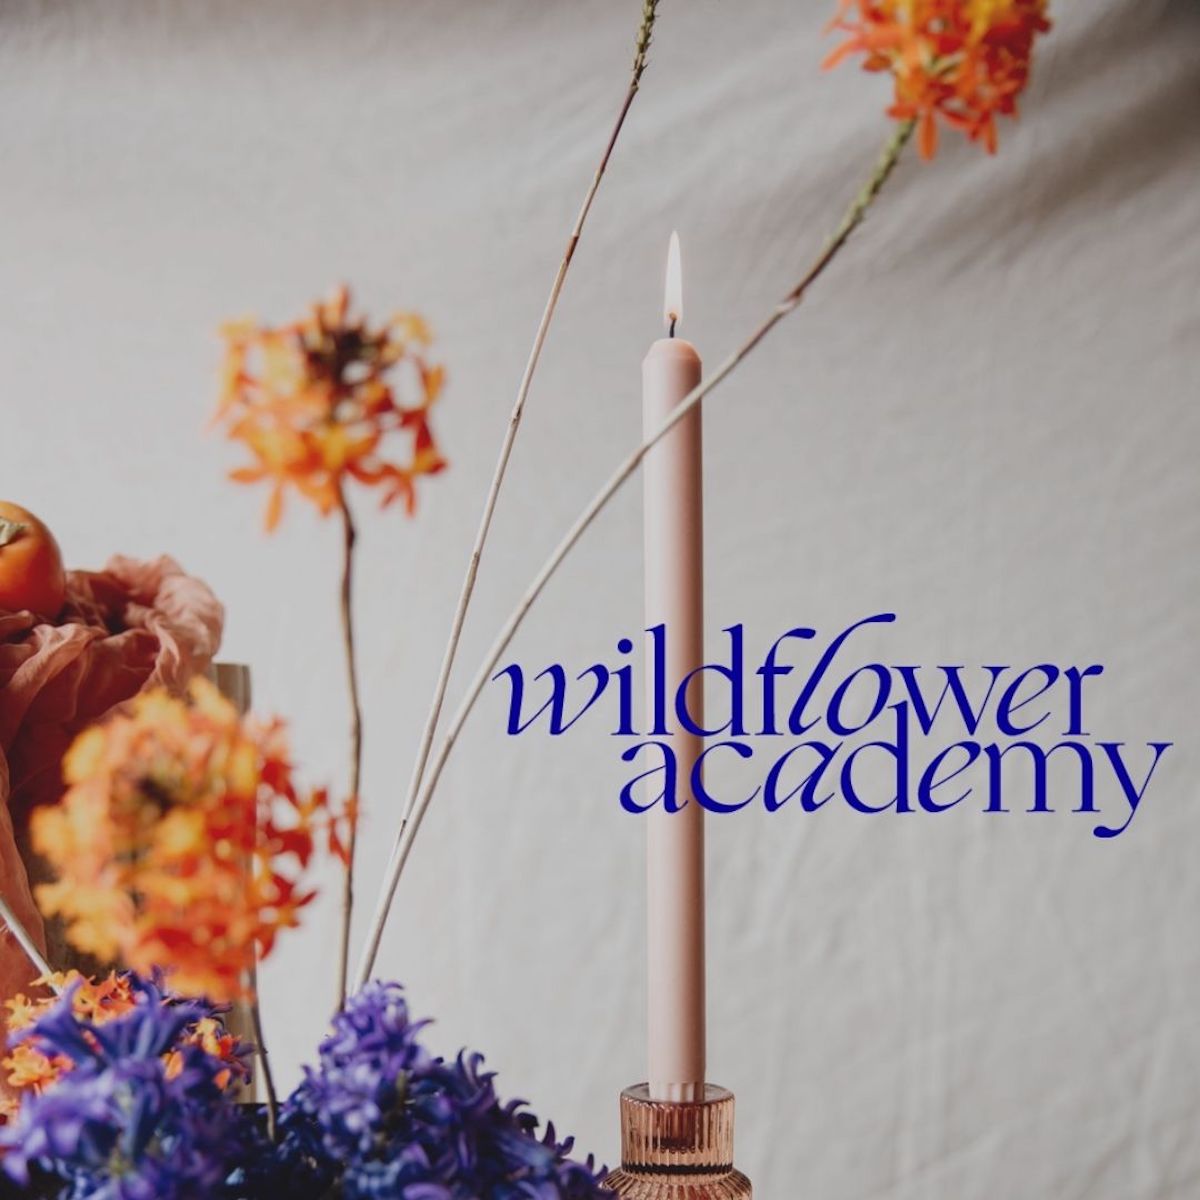 wildflower academy online floral platform film and foliage newcastle nsw